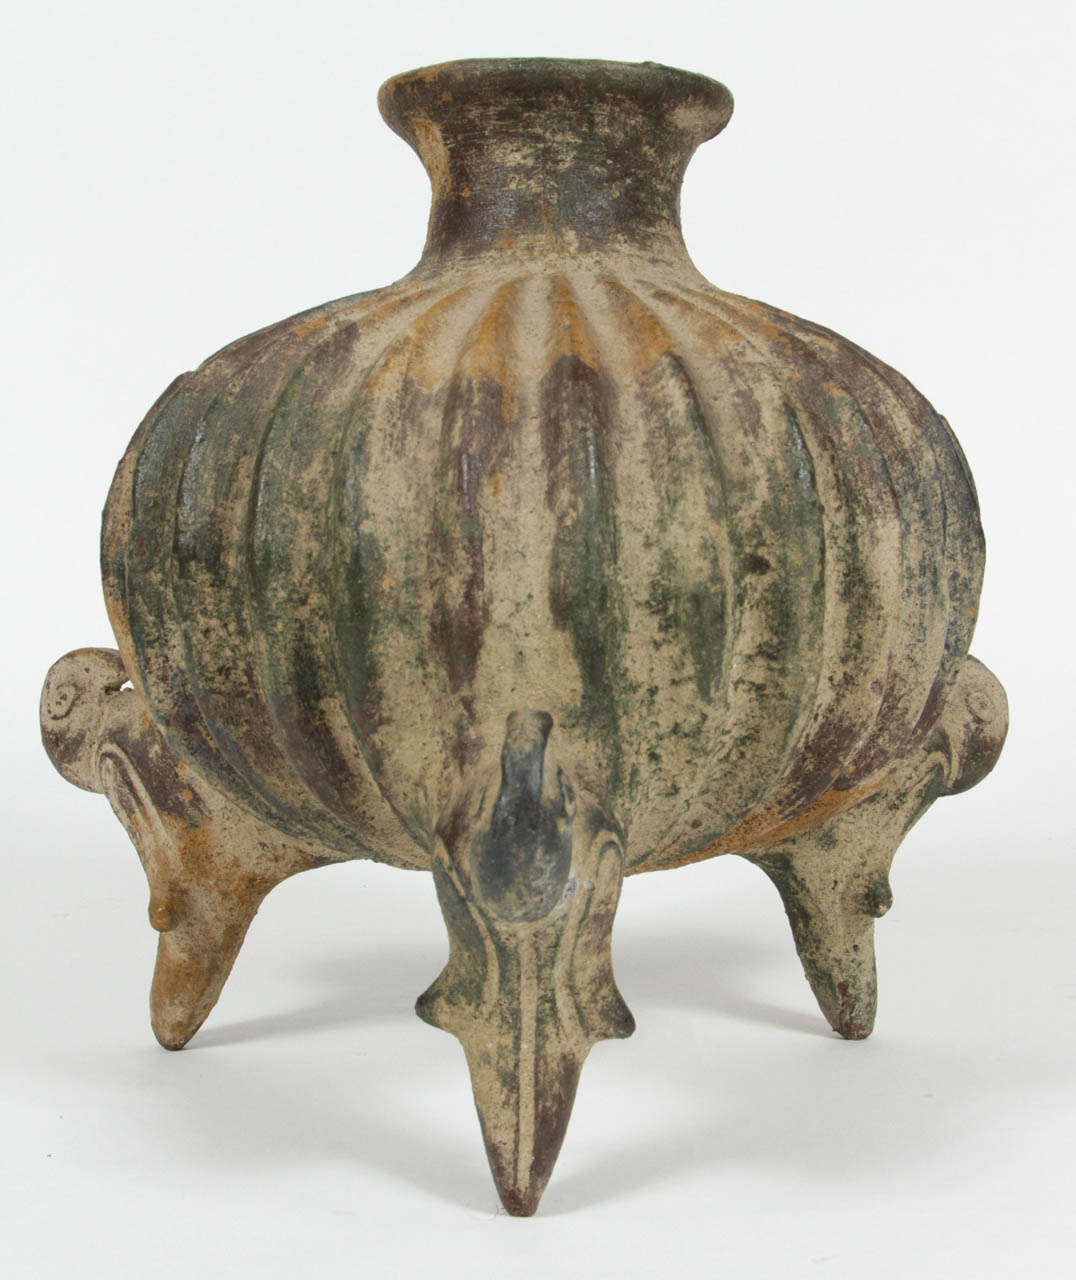 Pottery vessel with three decorative bird shaped legs.